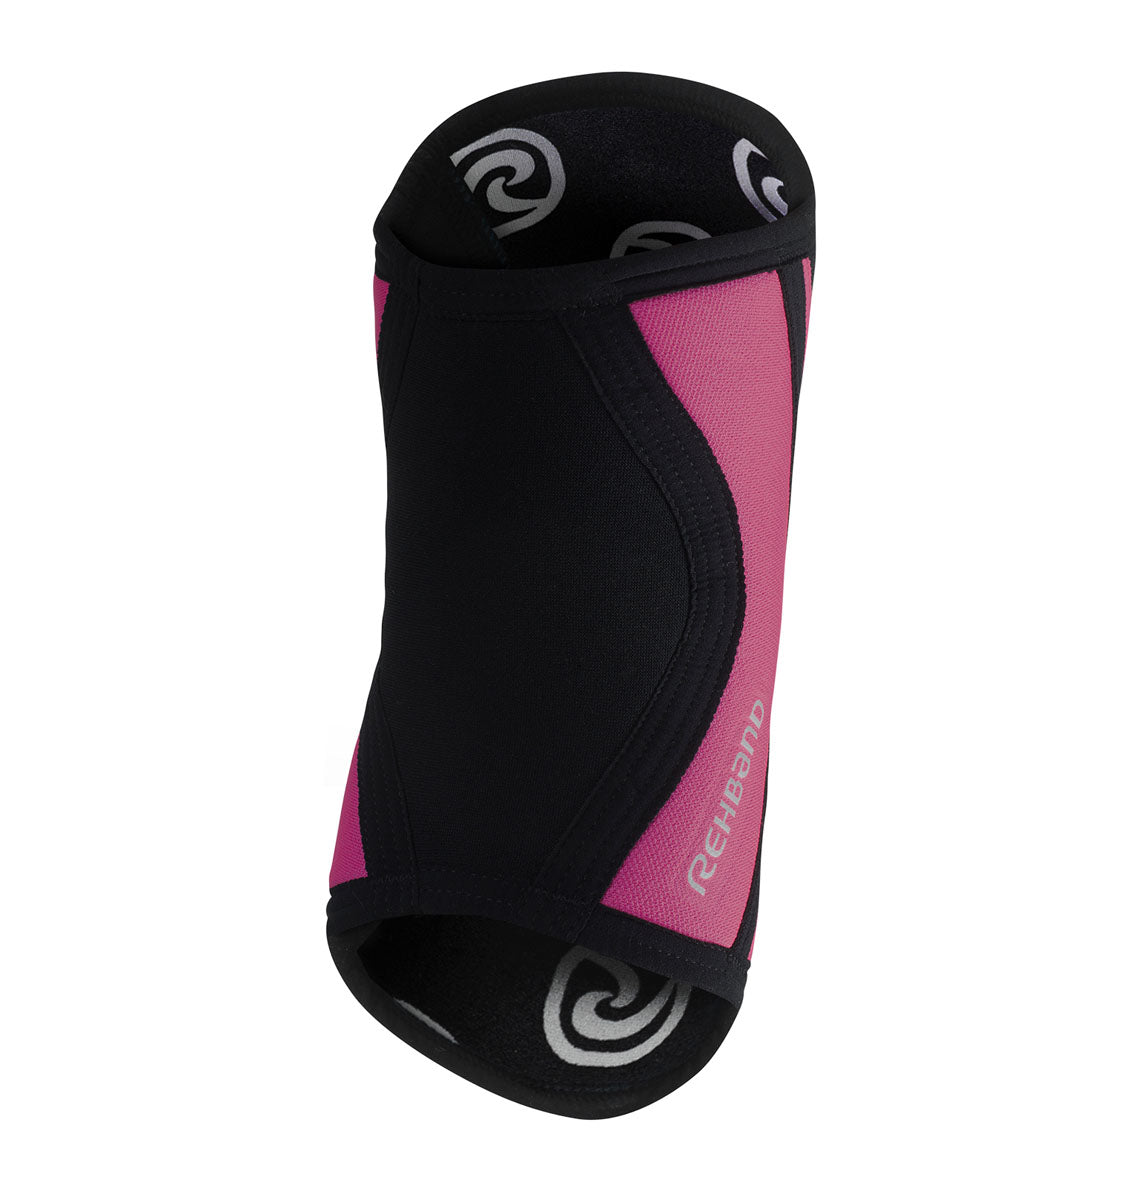 102333-020 - Rehband Rx Elbow Sleeve Black/Pink - 5mm - Back